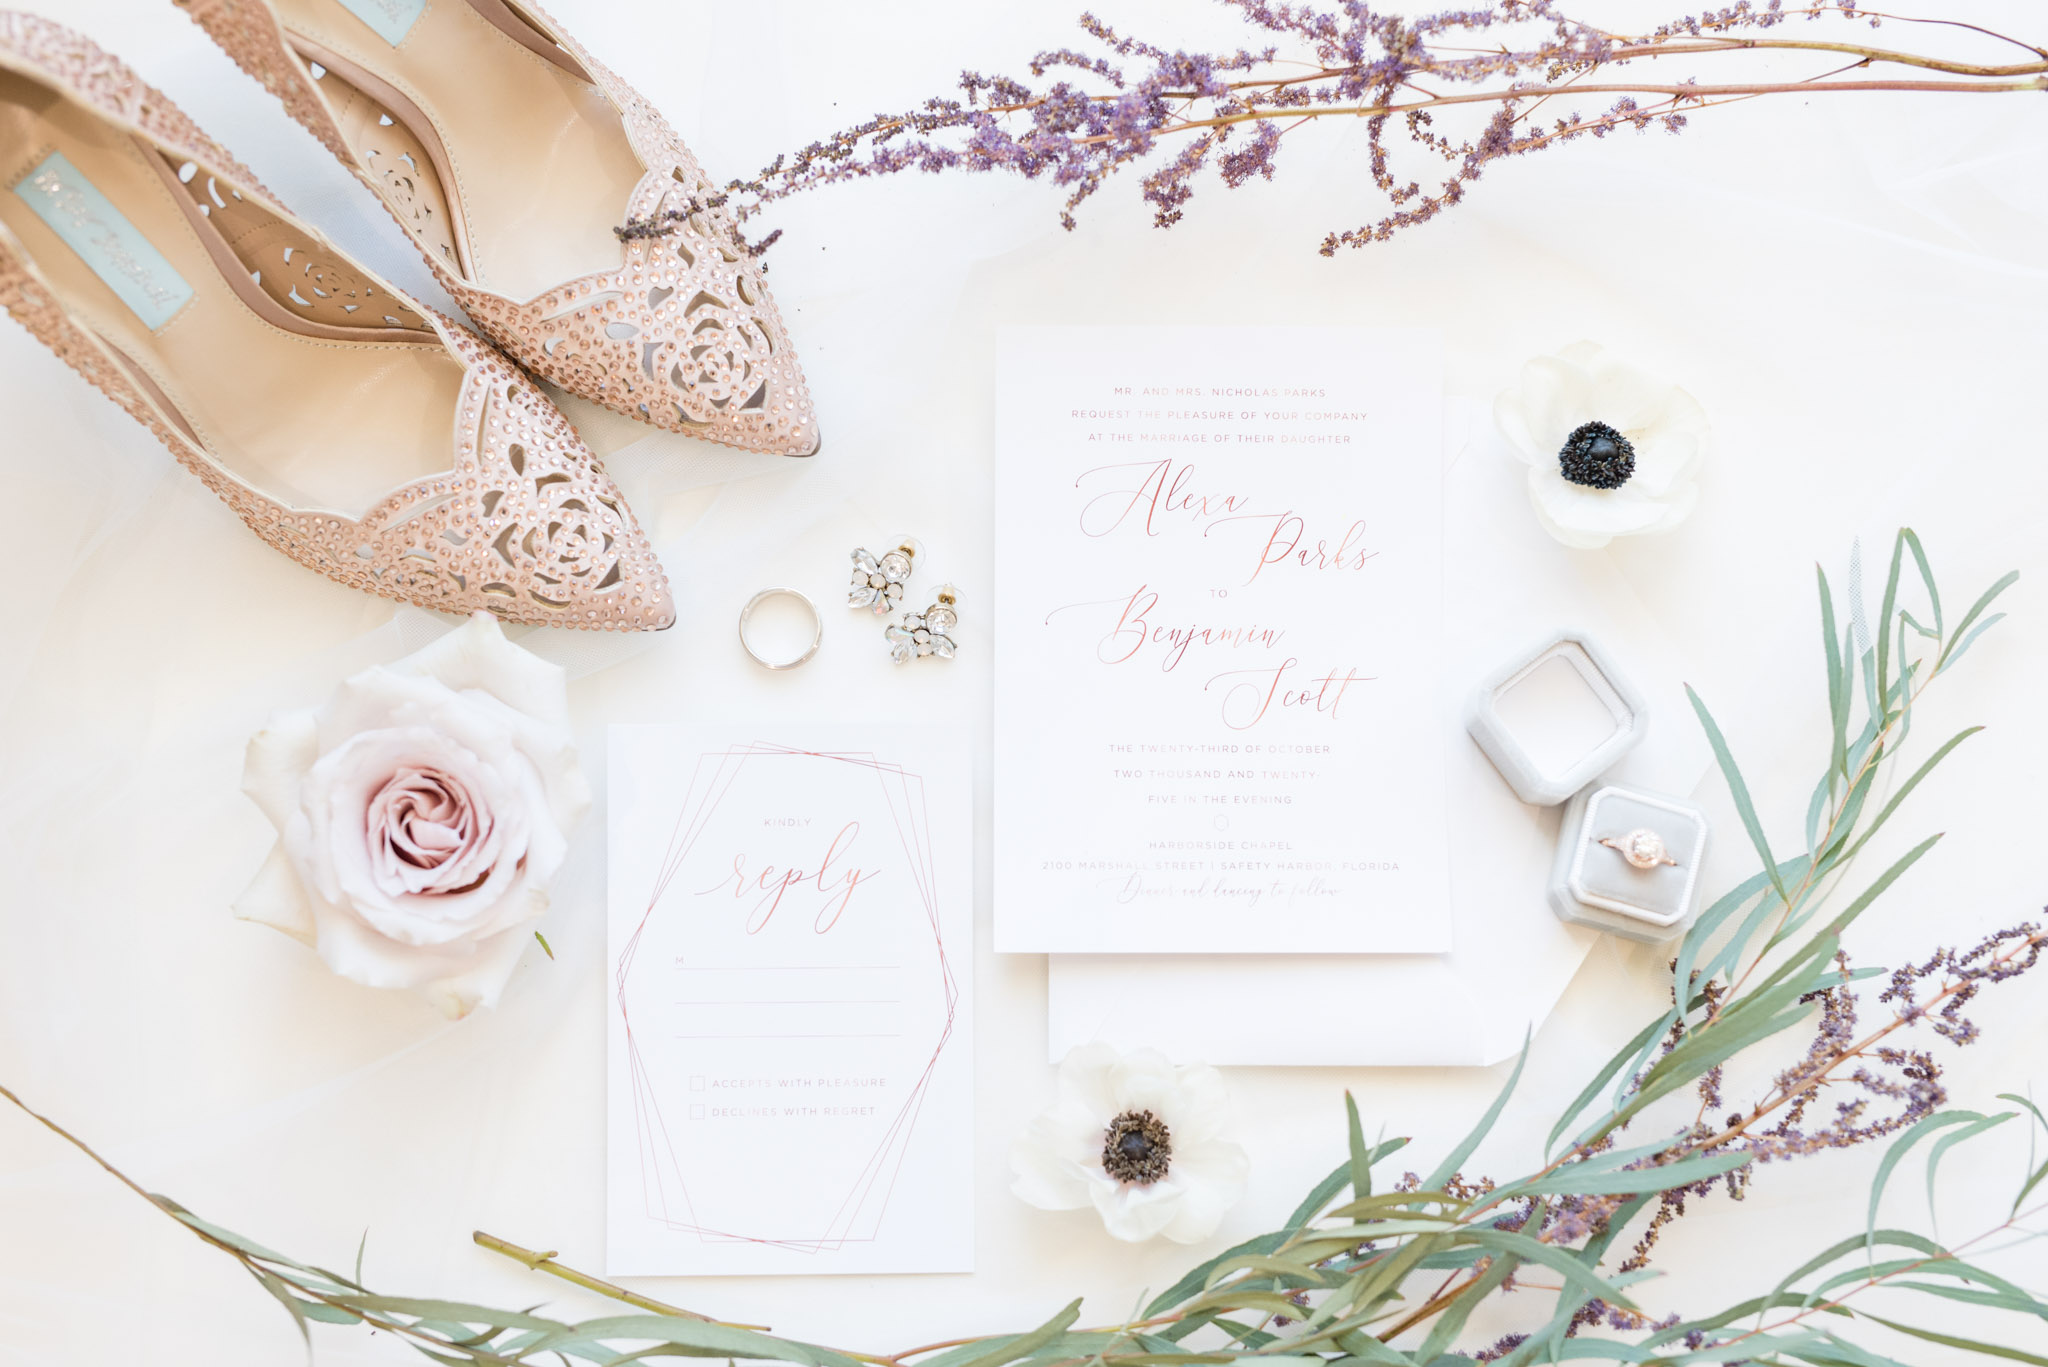 Wedding invitations and lavender.